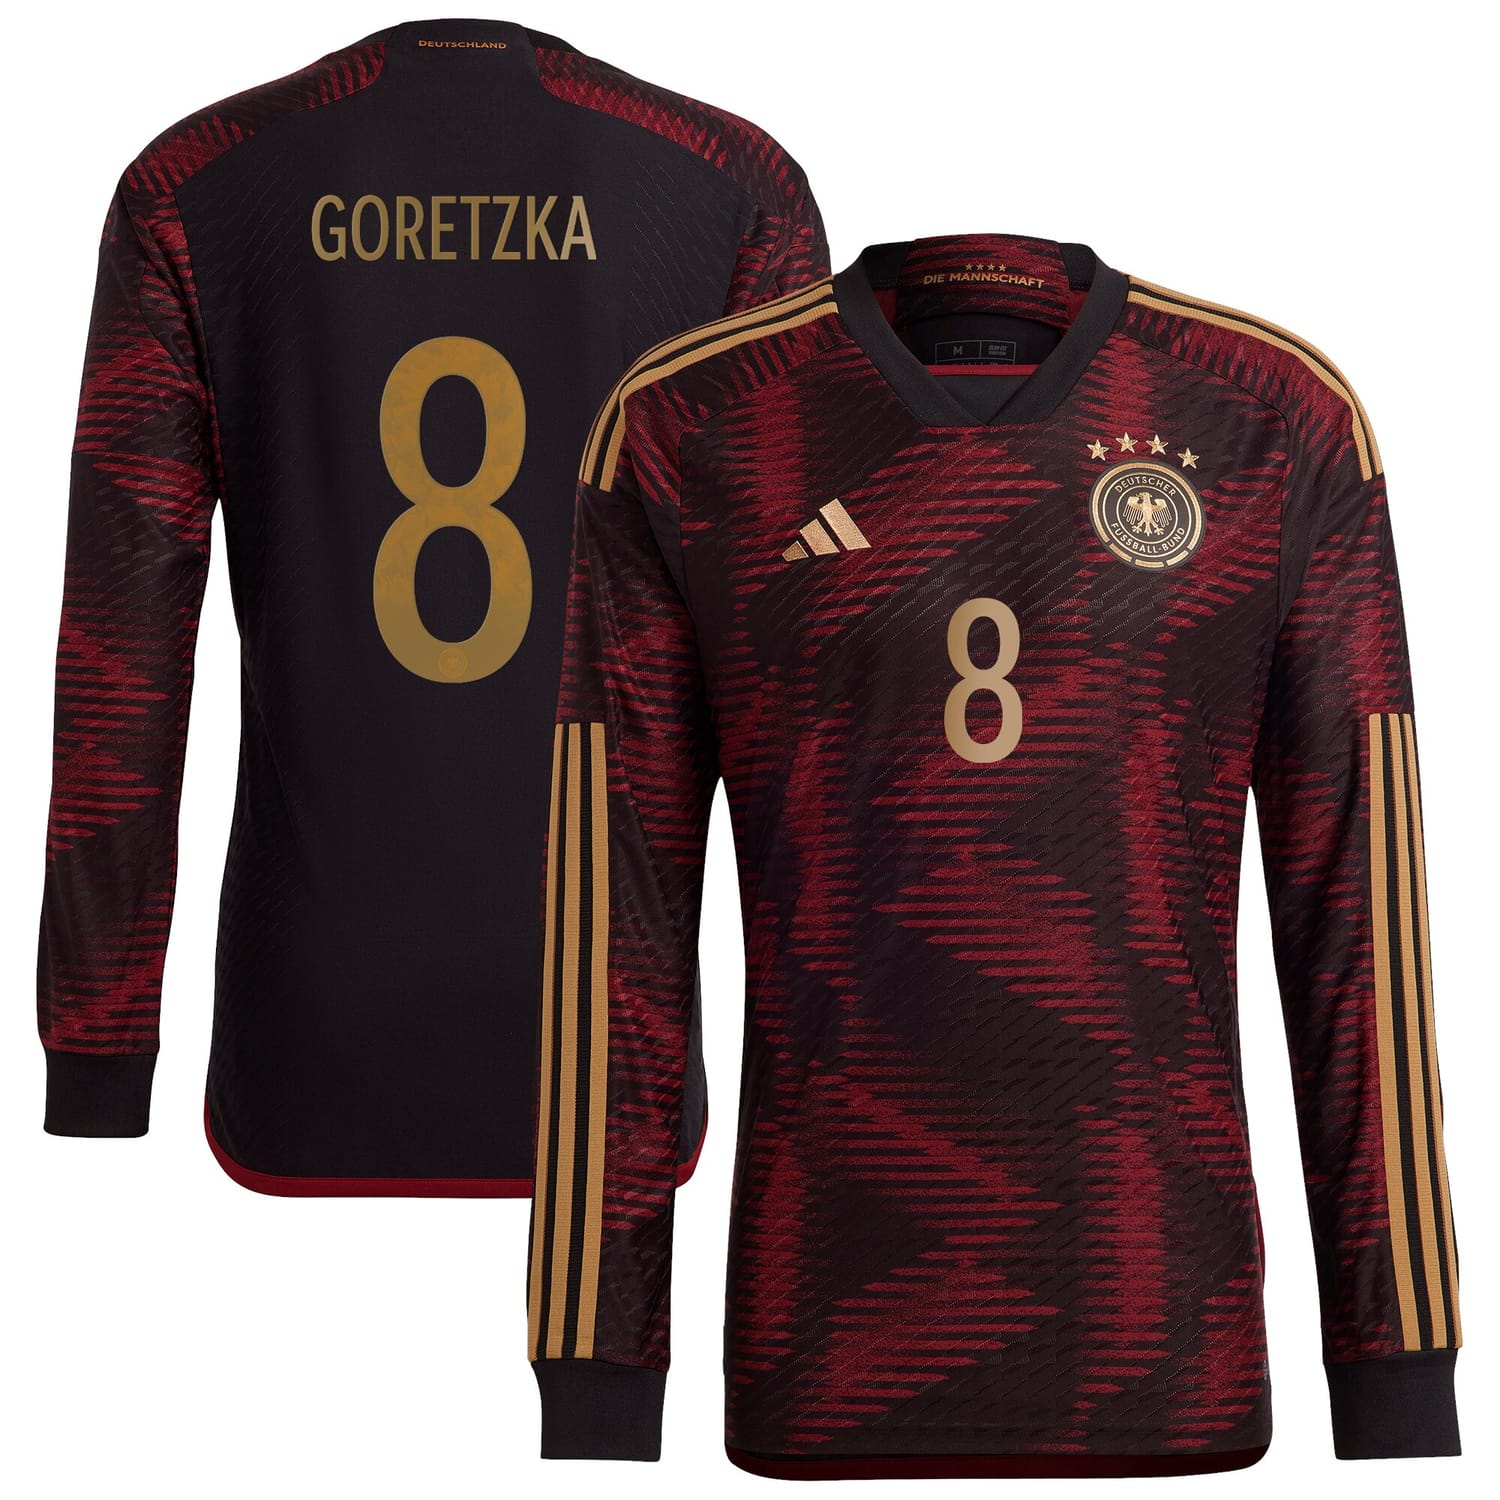 Germany National Team Away Authentic Jersey Shirt Long Sleeve player Leon Goretzka 8 printing for Men